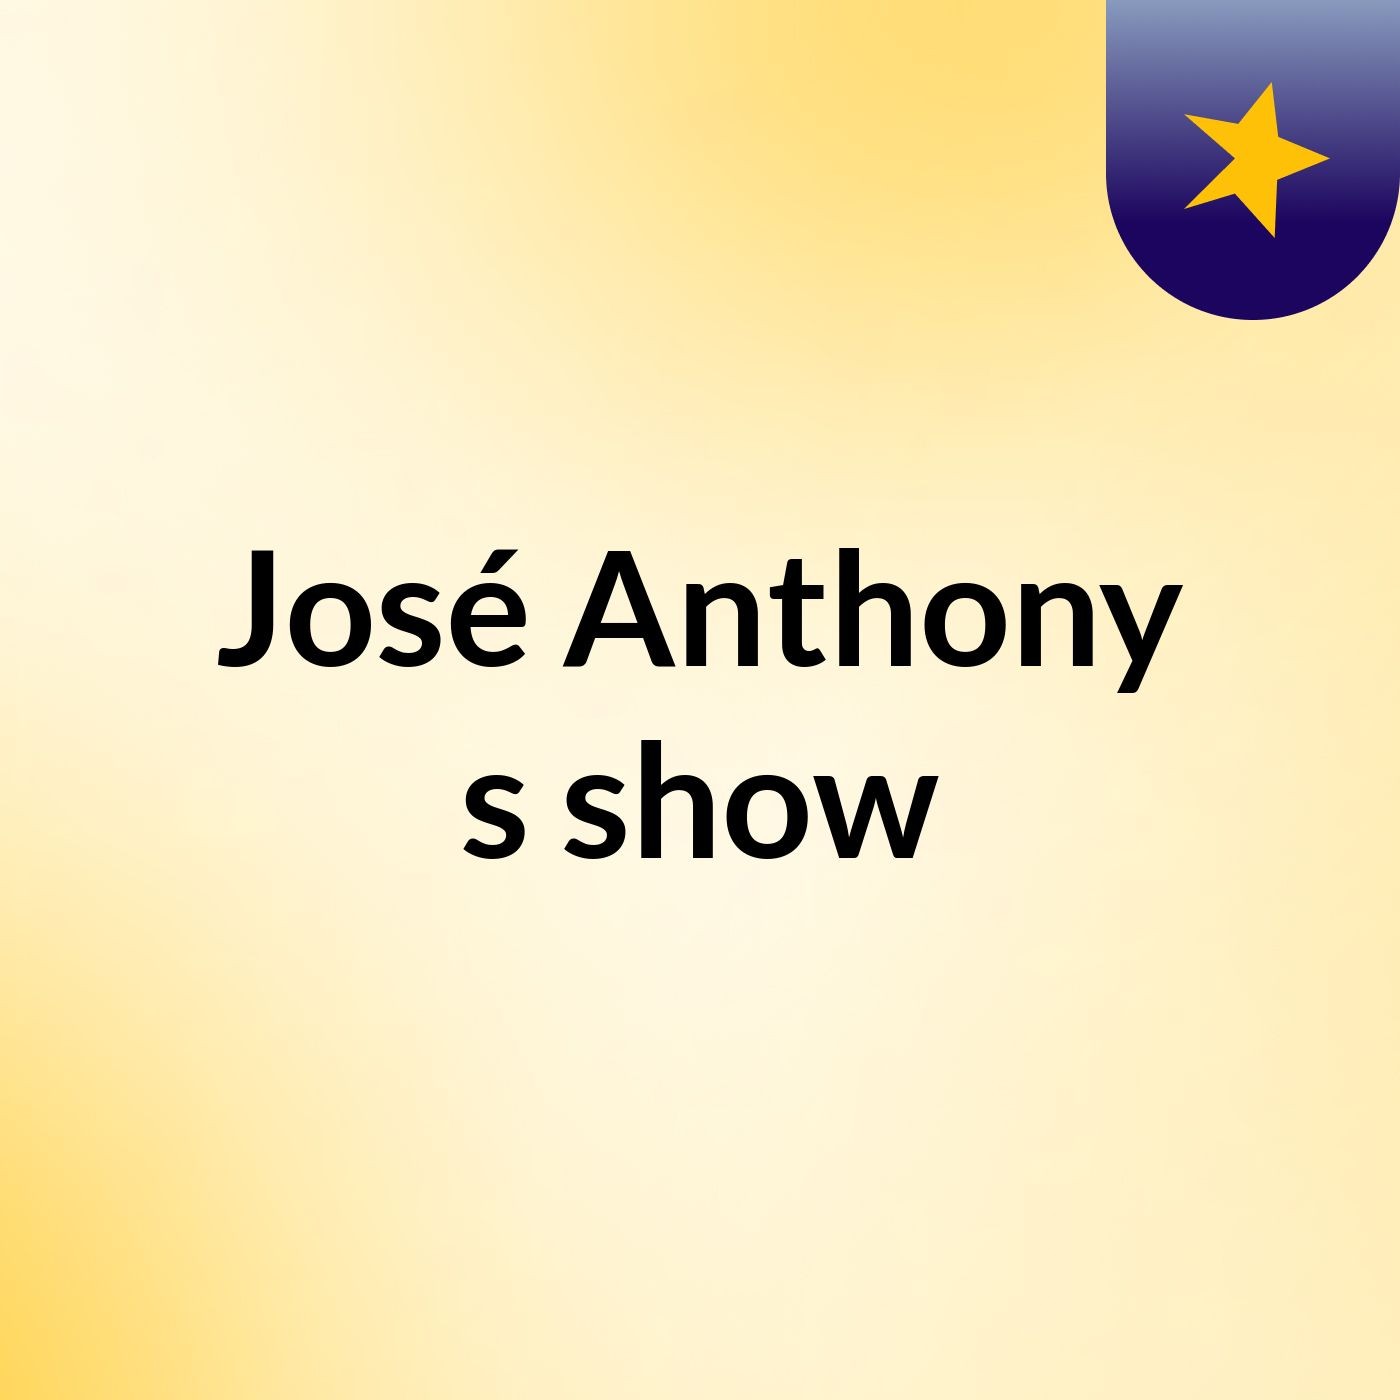 José Anthony's show